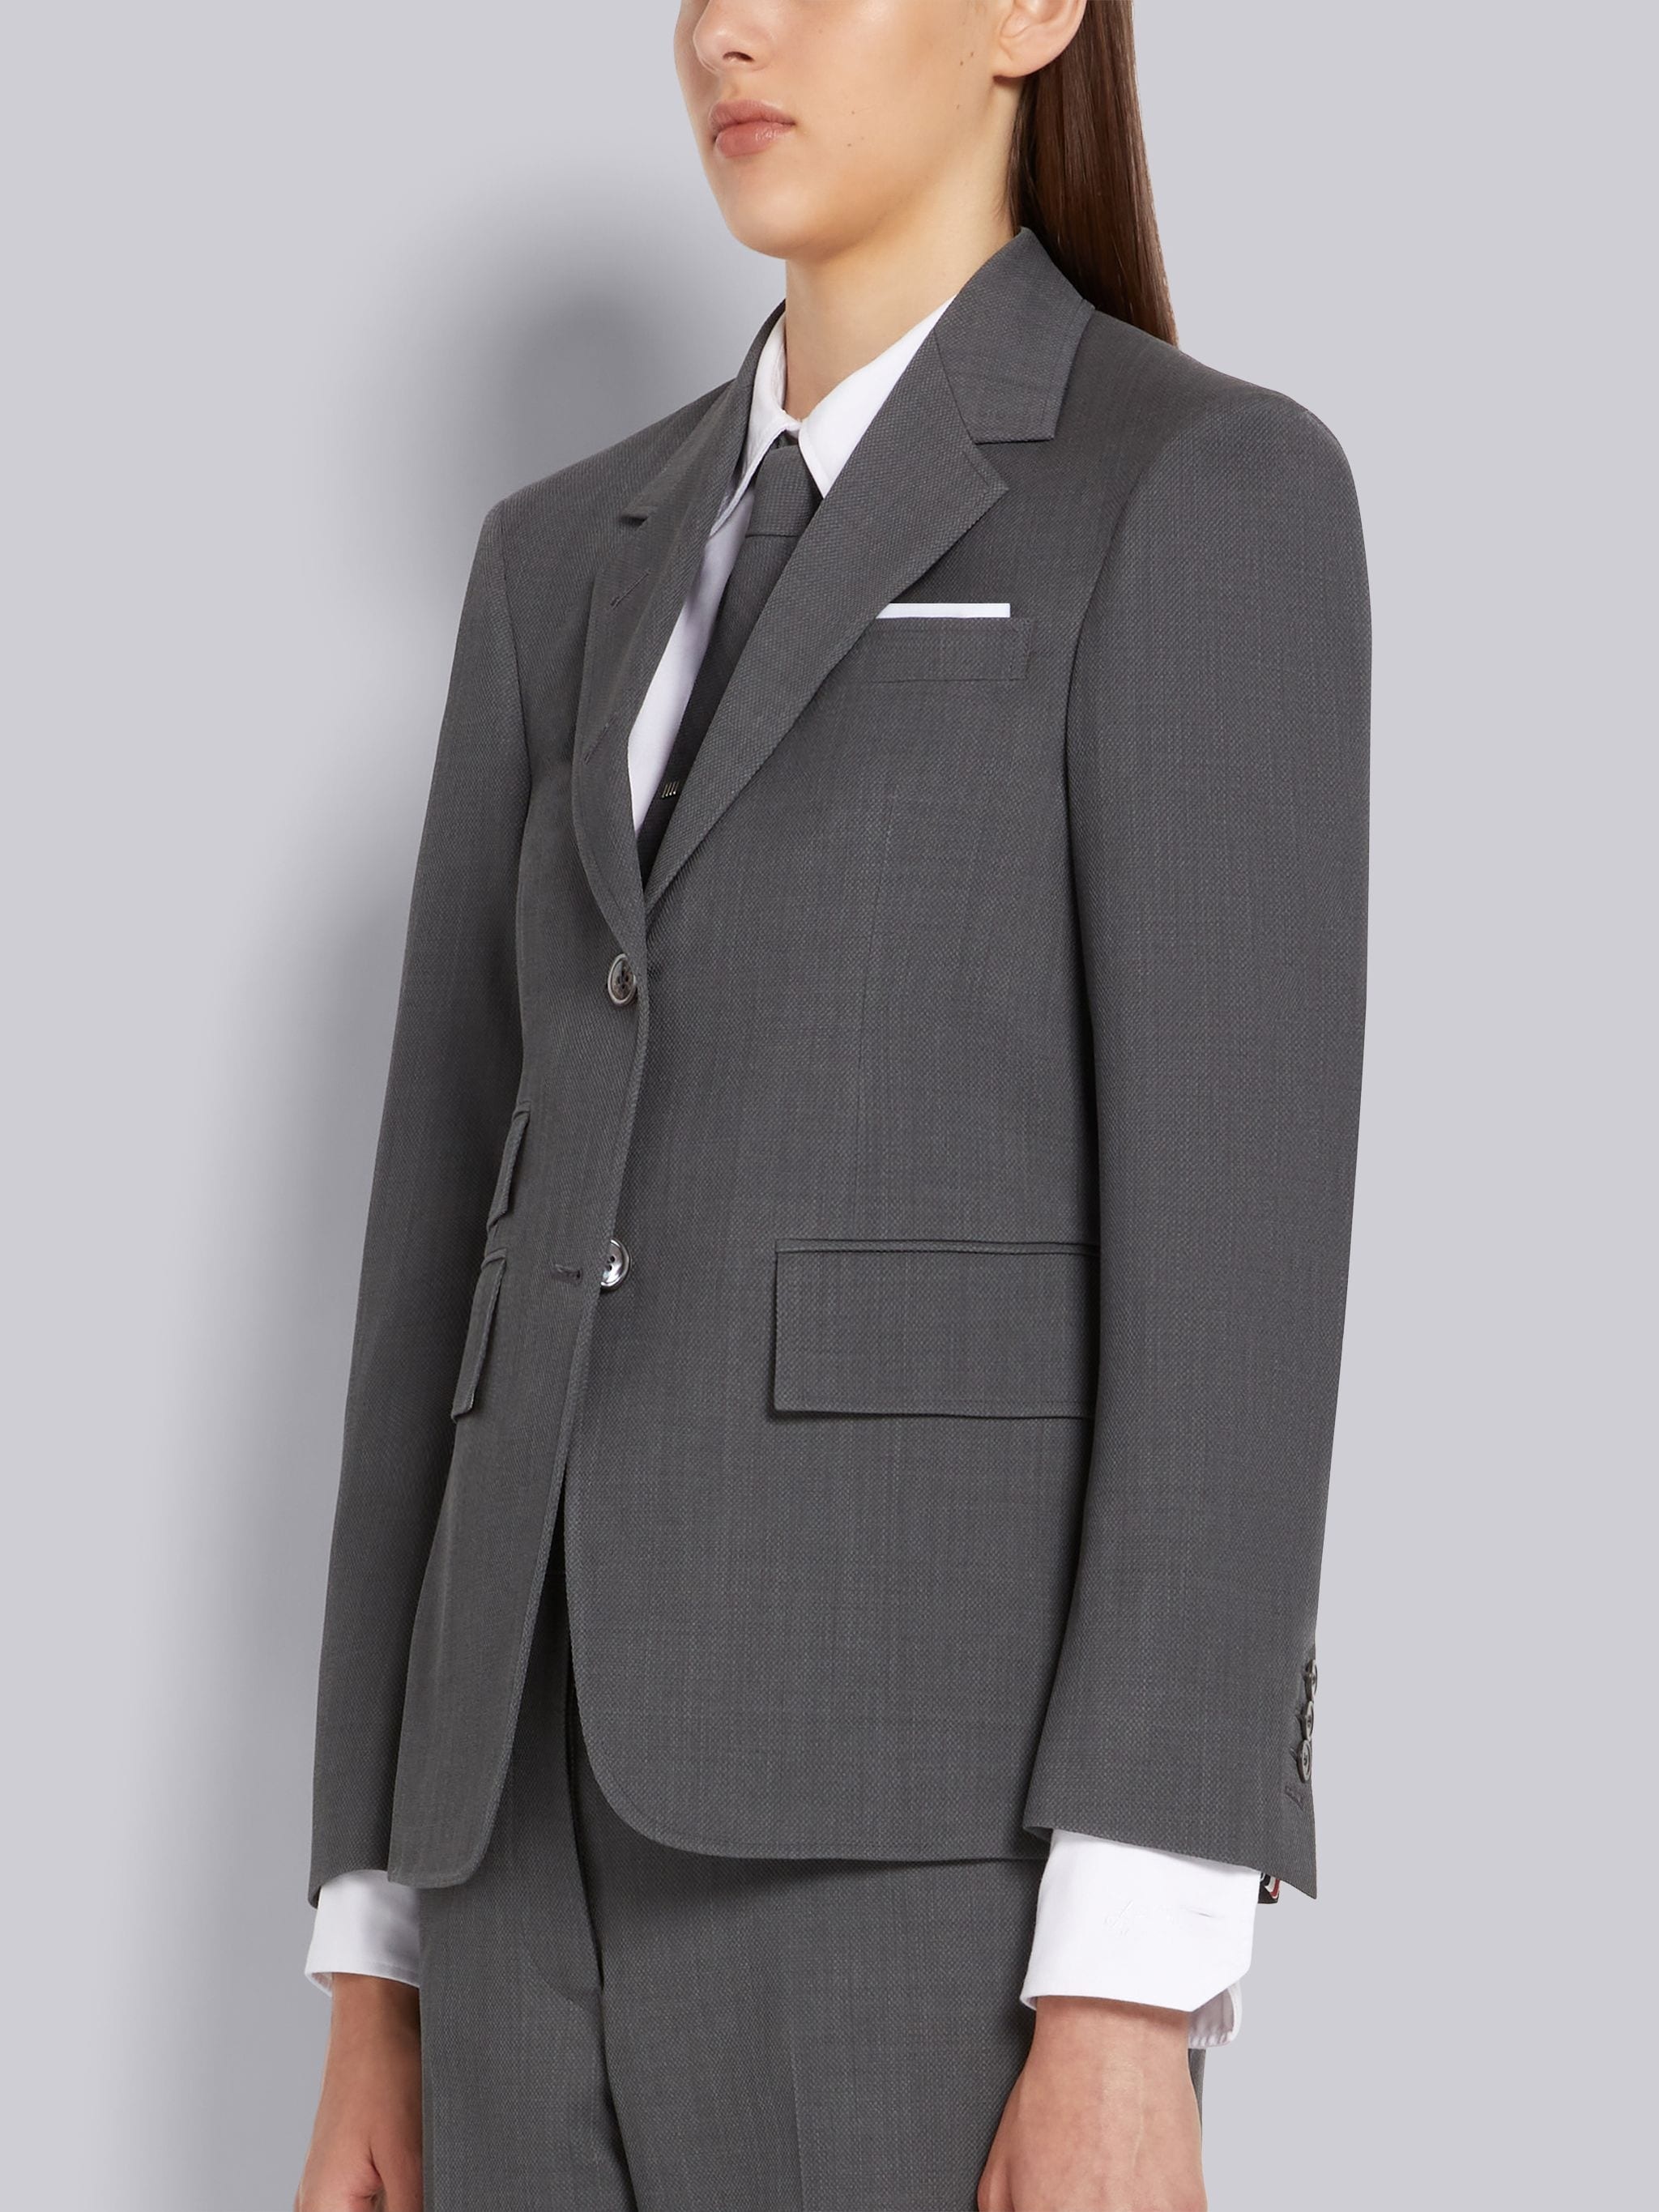 Medium Grey Wool Pique Suiting Single Vent Jacket - 2